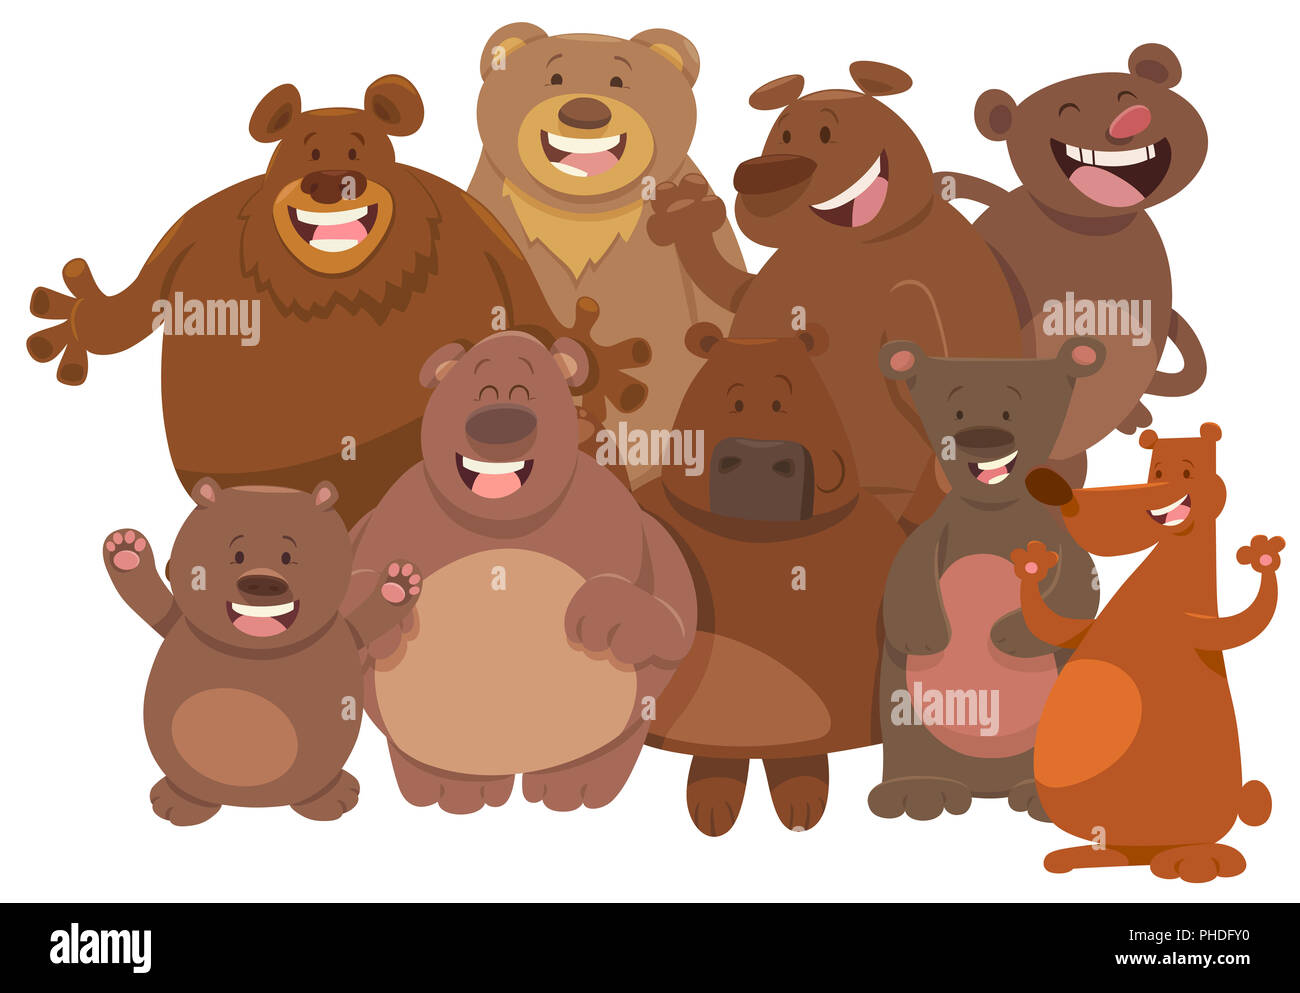 cartoon wild bears animal characters group Stock Photo - Alamy